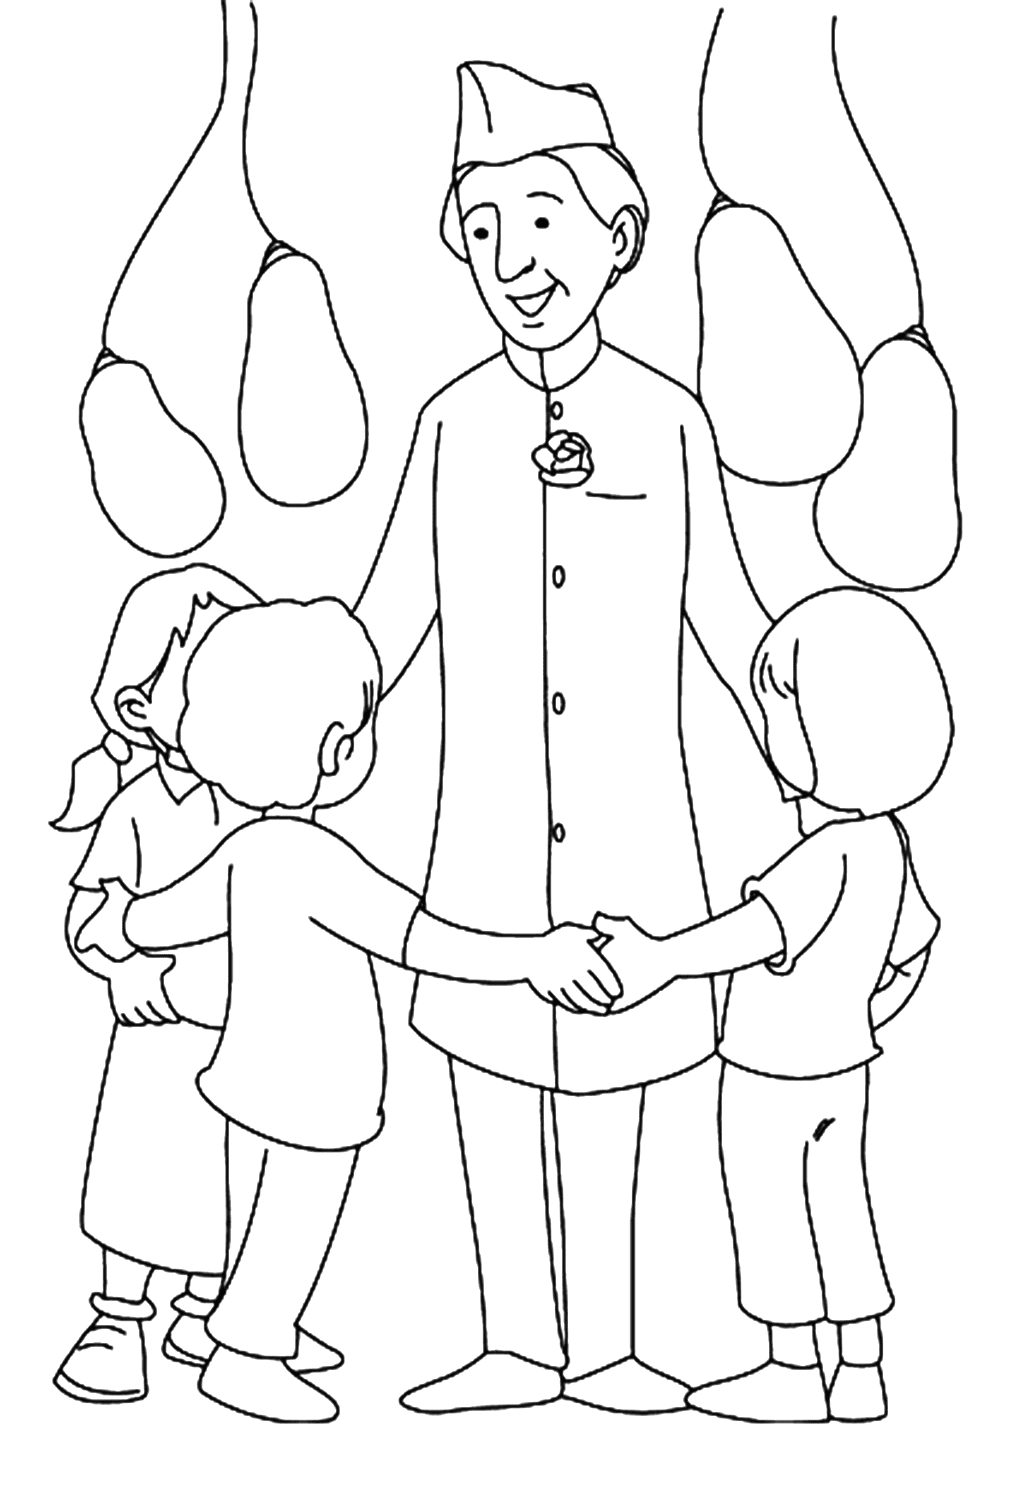 Jawaharlal Nehru Playing With Kids Coloring Page